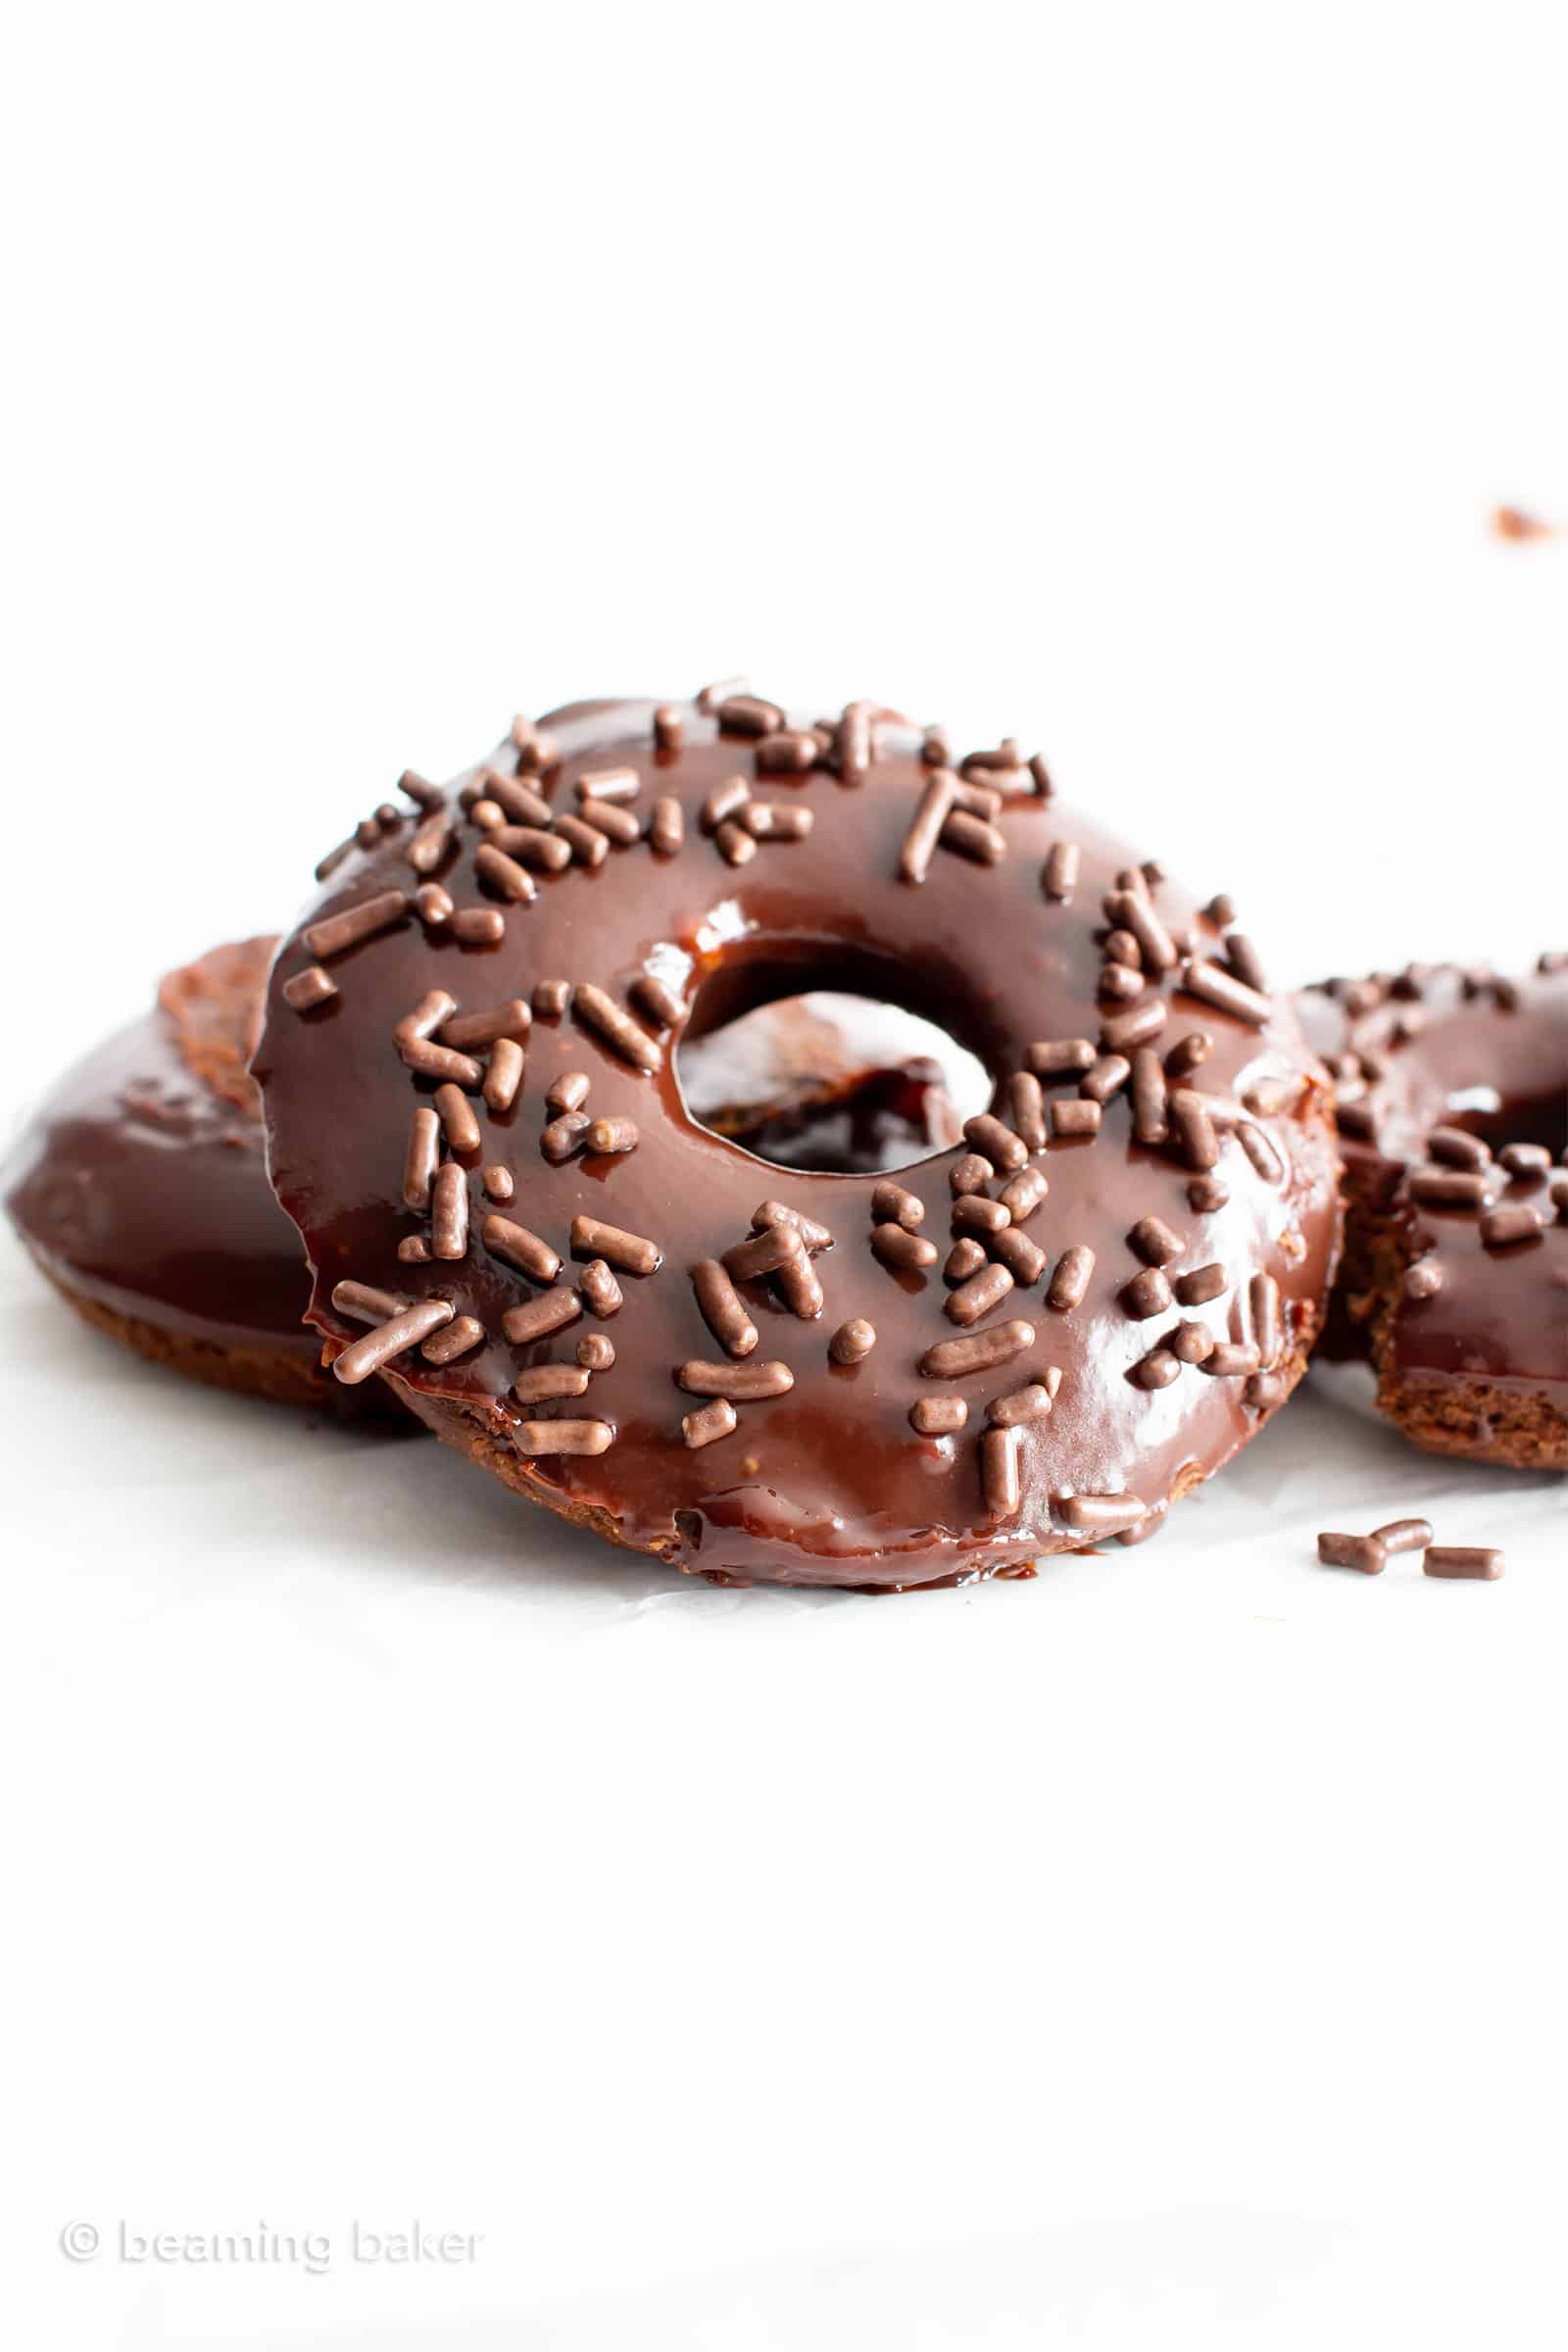 Vegan Gluten Free Donuts: soft ‘n fluffy vegan gf chocolate donuts topped with luxurious vegan chocolate glaze. The best gluten free vegan donut recipe! #GlutenFreeVegan #VeganGlutenFree #VeganDonuts #Doughnuts #Vegan | Recipe at BeamingBaker.com